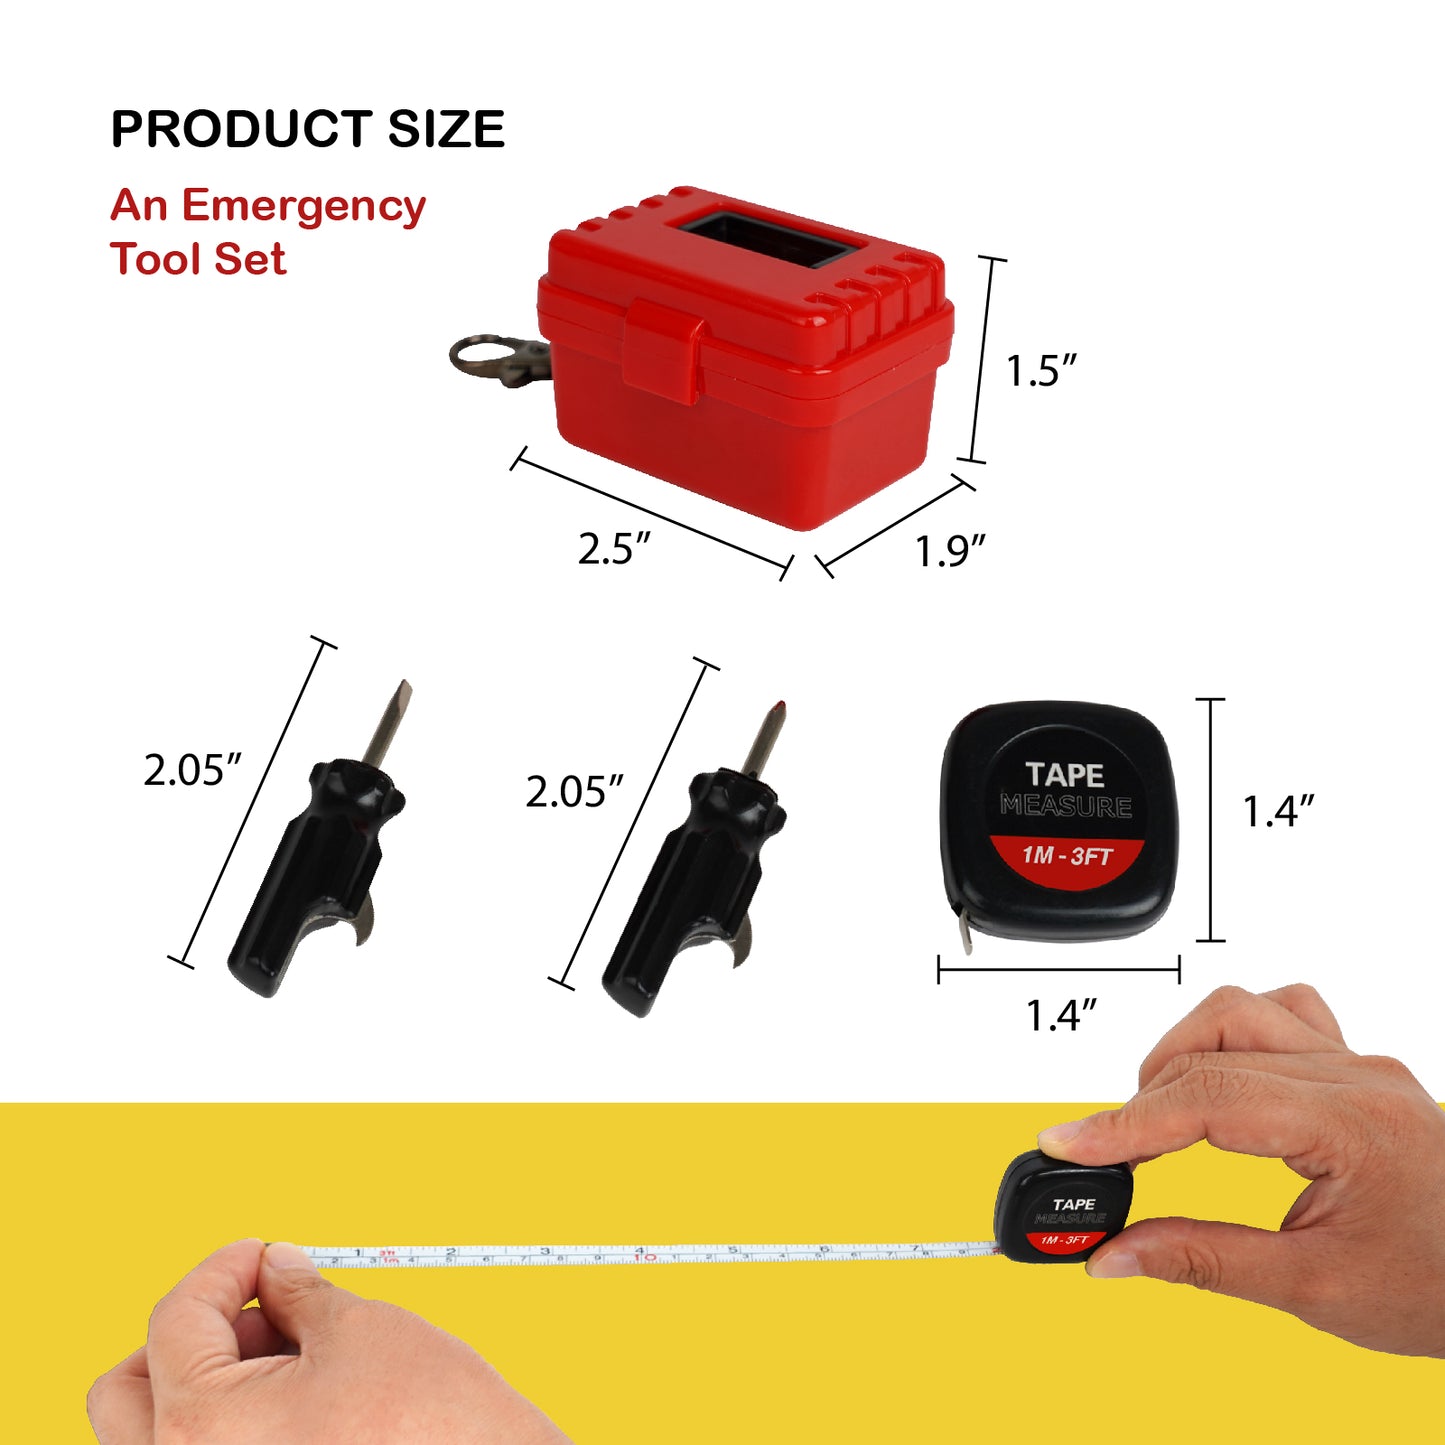 YOBRO Mighty Mini Tool Kit WSG1616